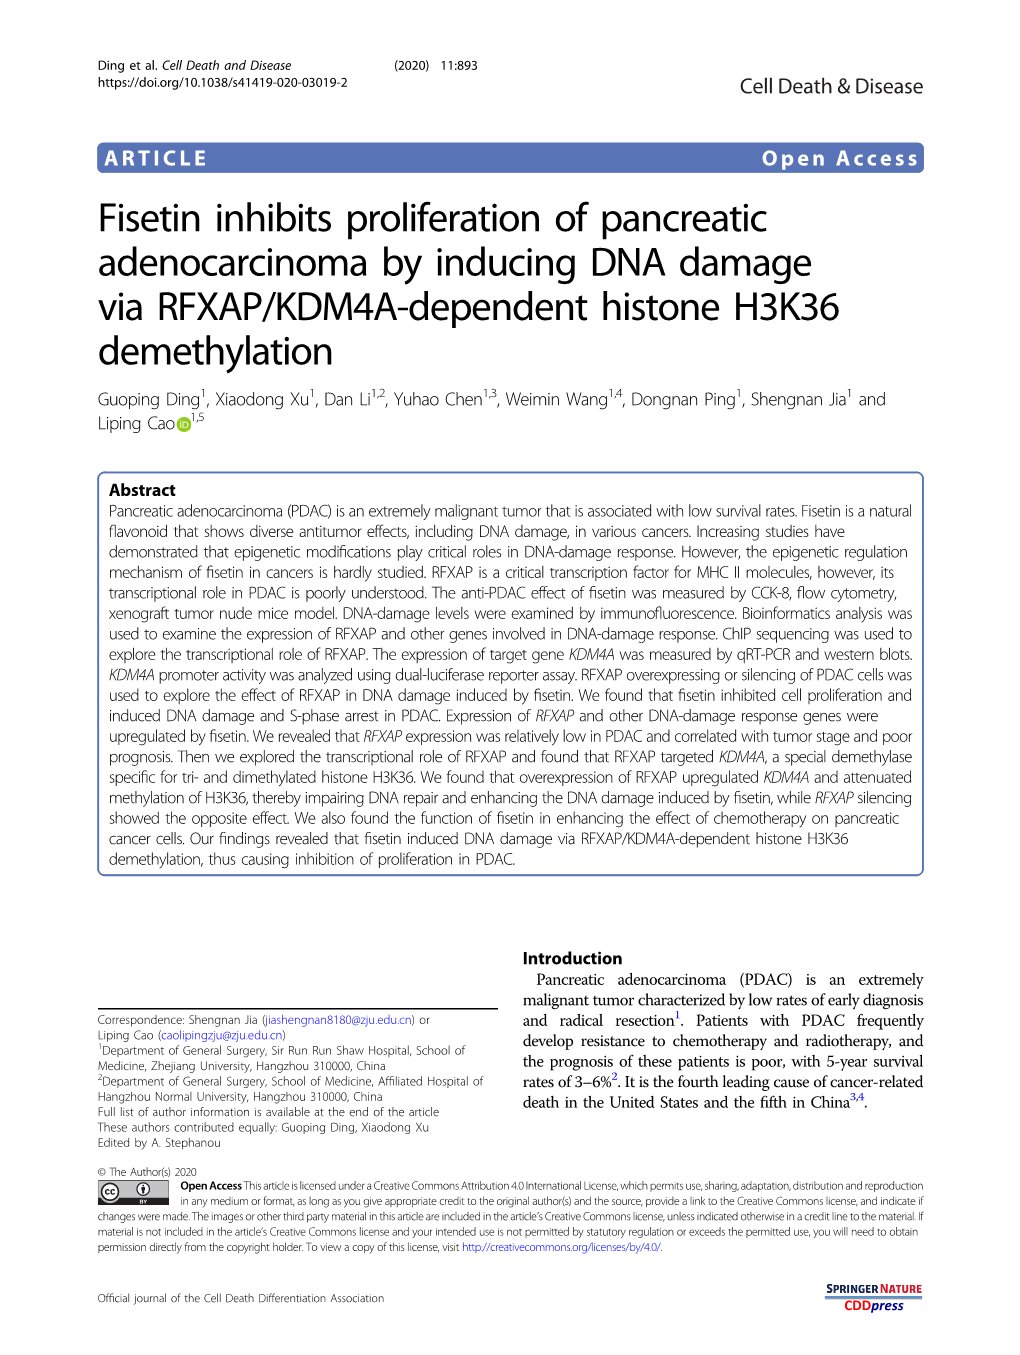 Fisetin Inhibits Proliferation of Pancreatic Adenocarcinoma By